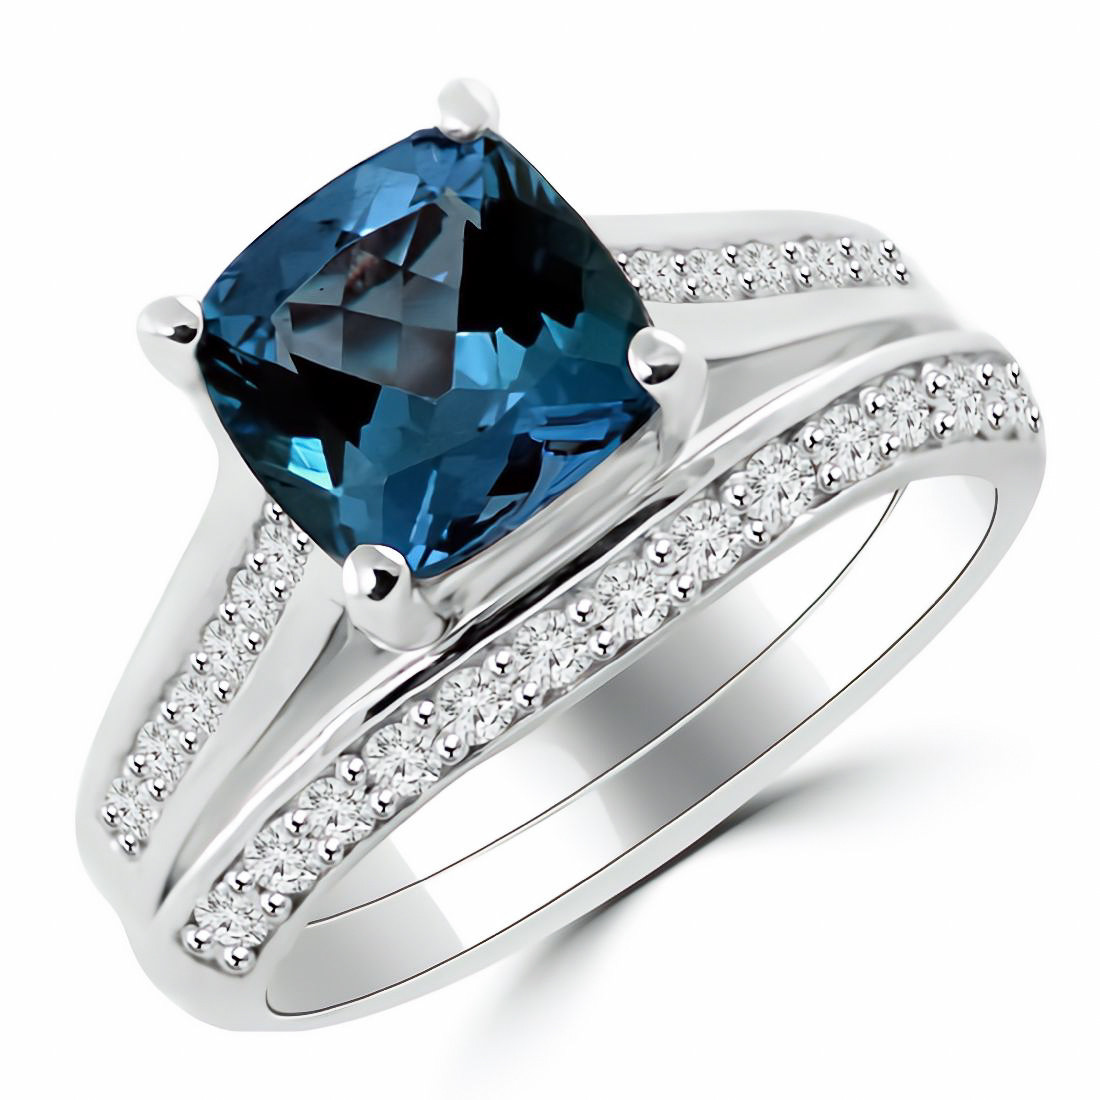 Semi-Precious Gemstone Rings - Jewelry Point